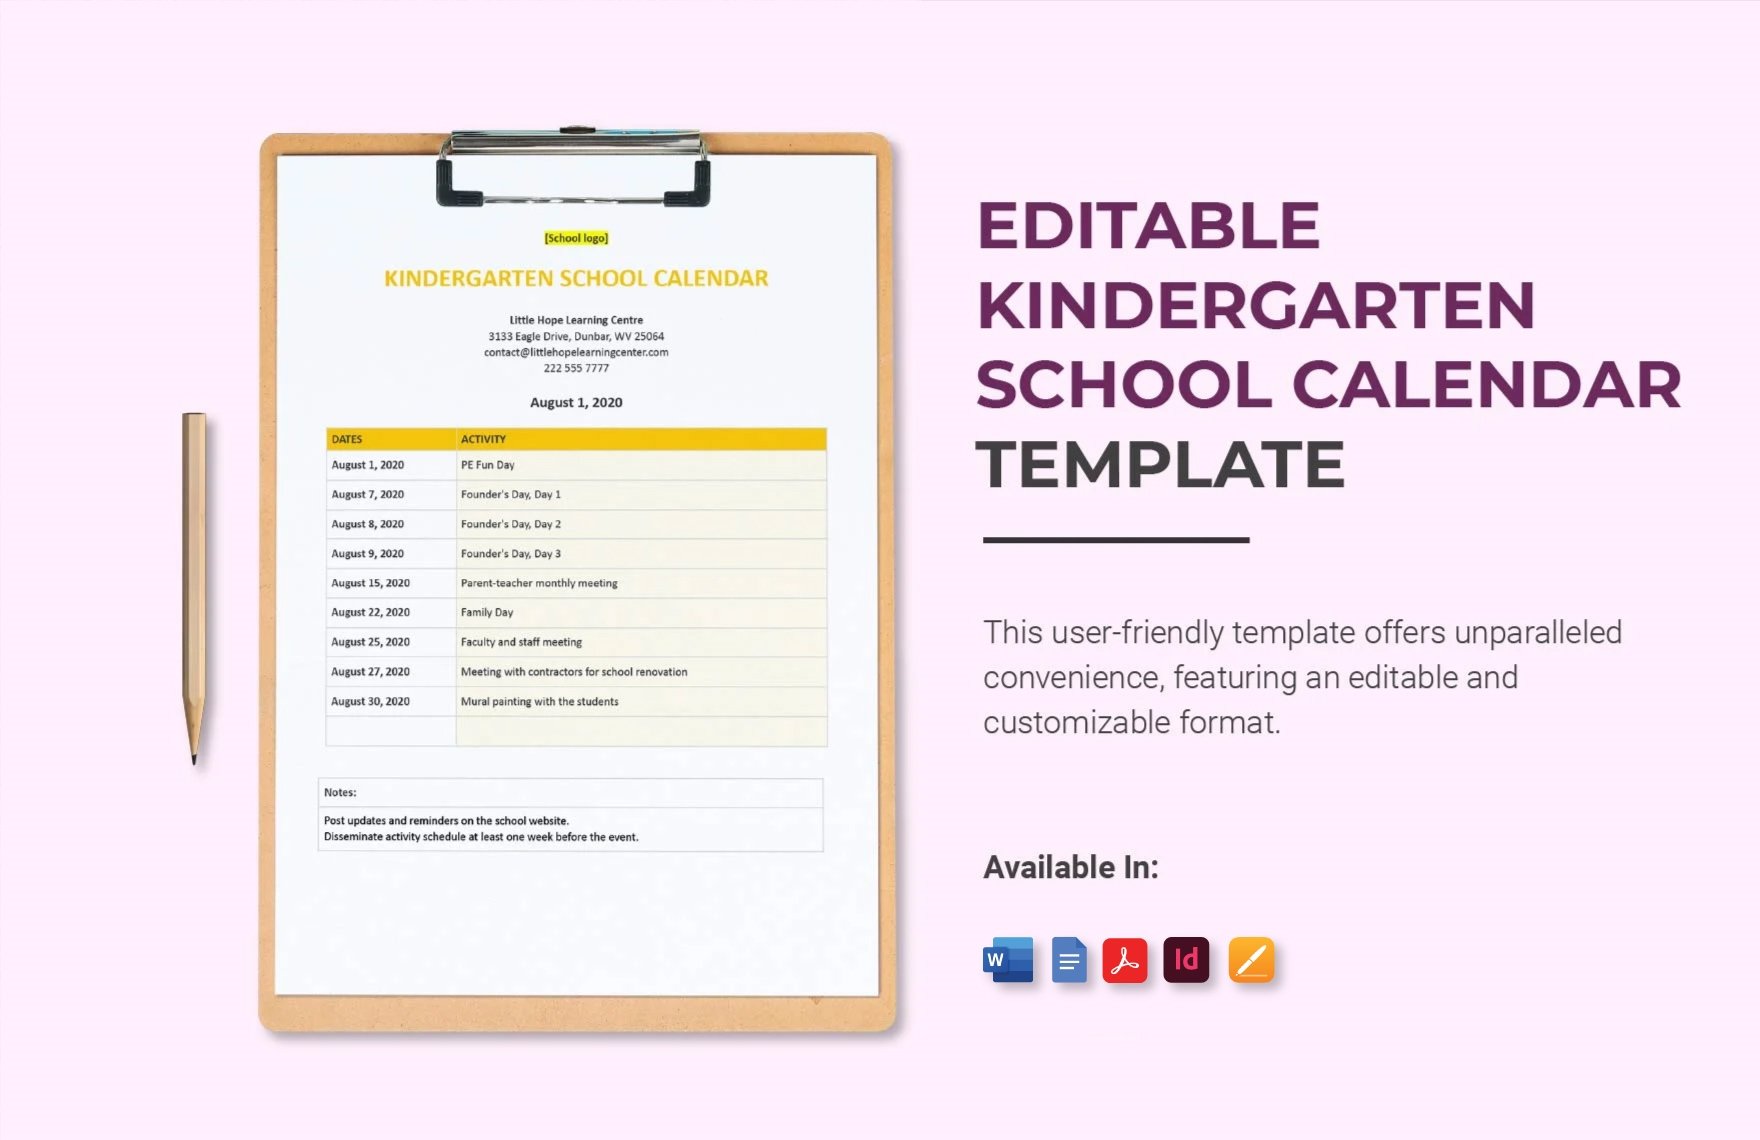 Free Editable Kindergarten School Calendar Template in Word, Google Docs, PDF, Apple Pages, InDesign